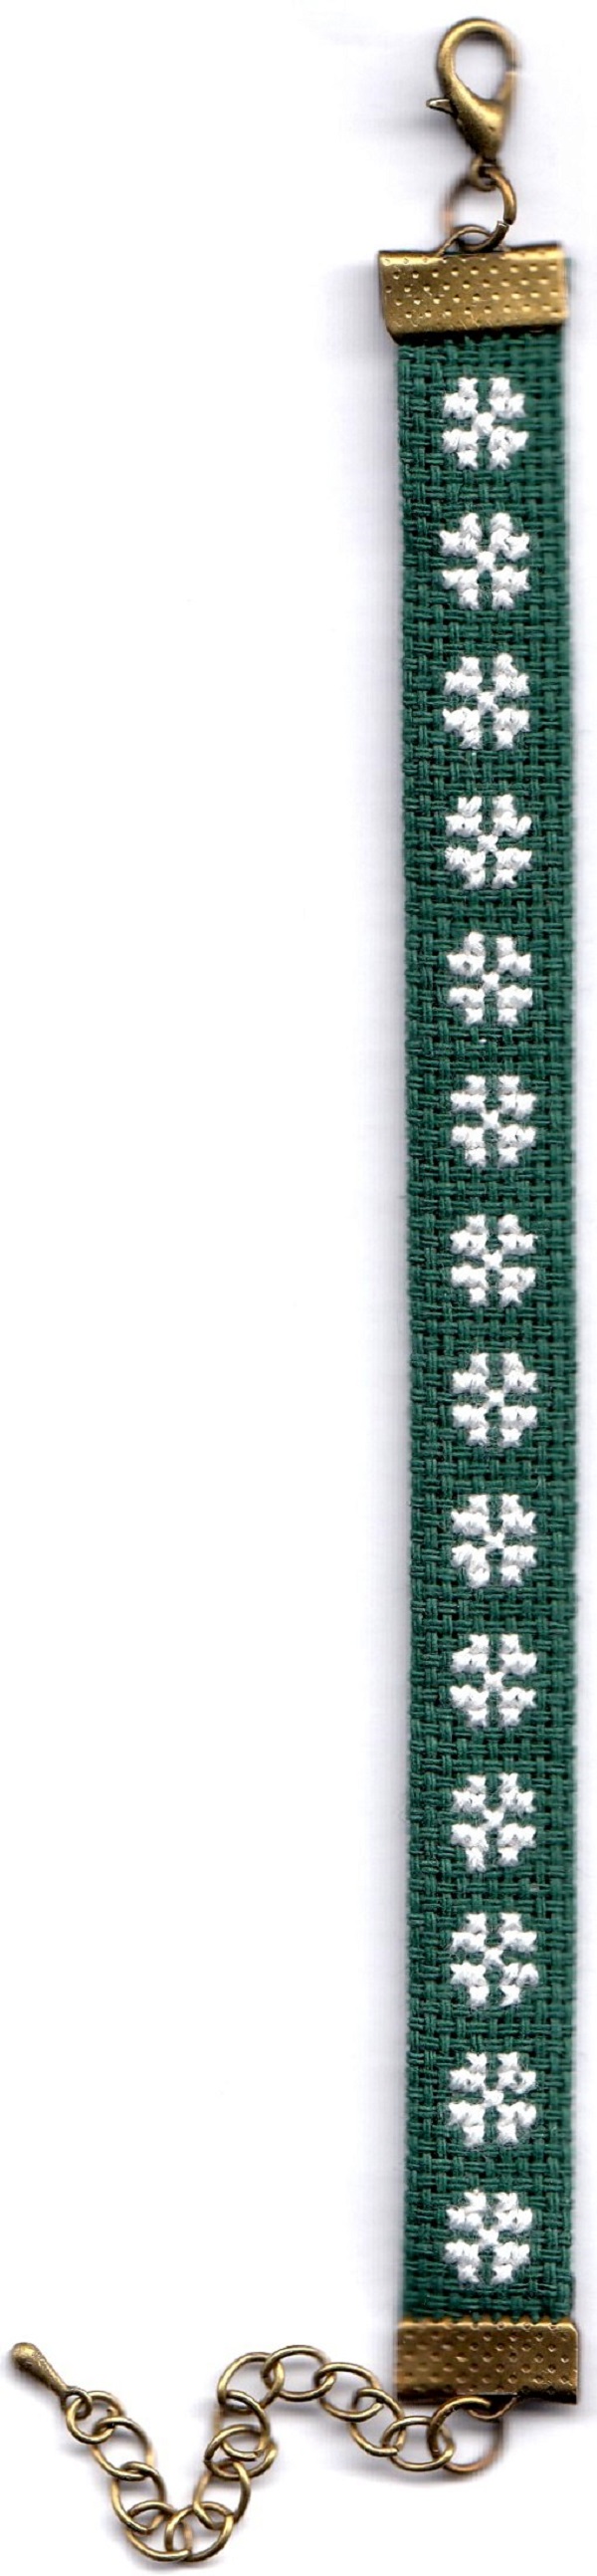 Bratara cusuta manual: Motiv traditional. Verde cu broderie alba